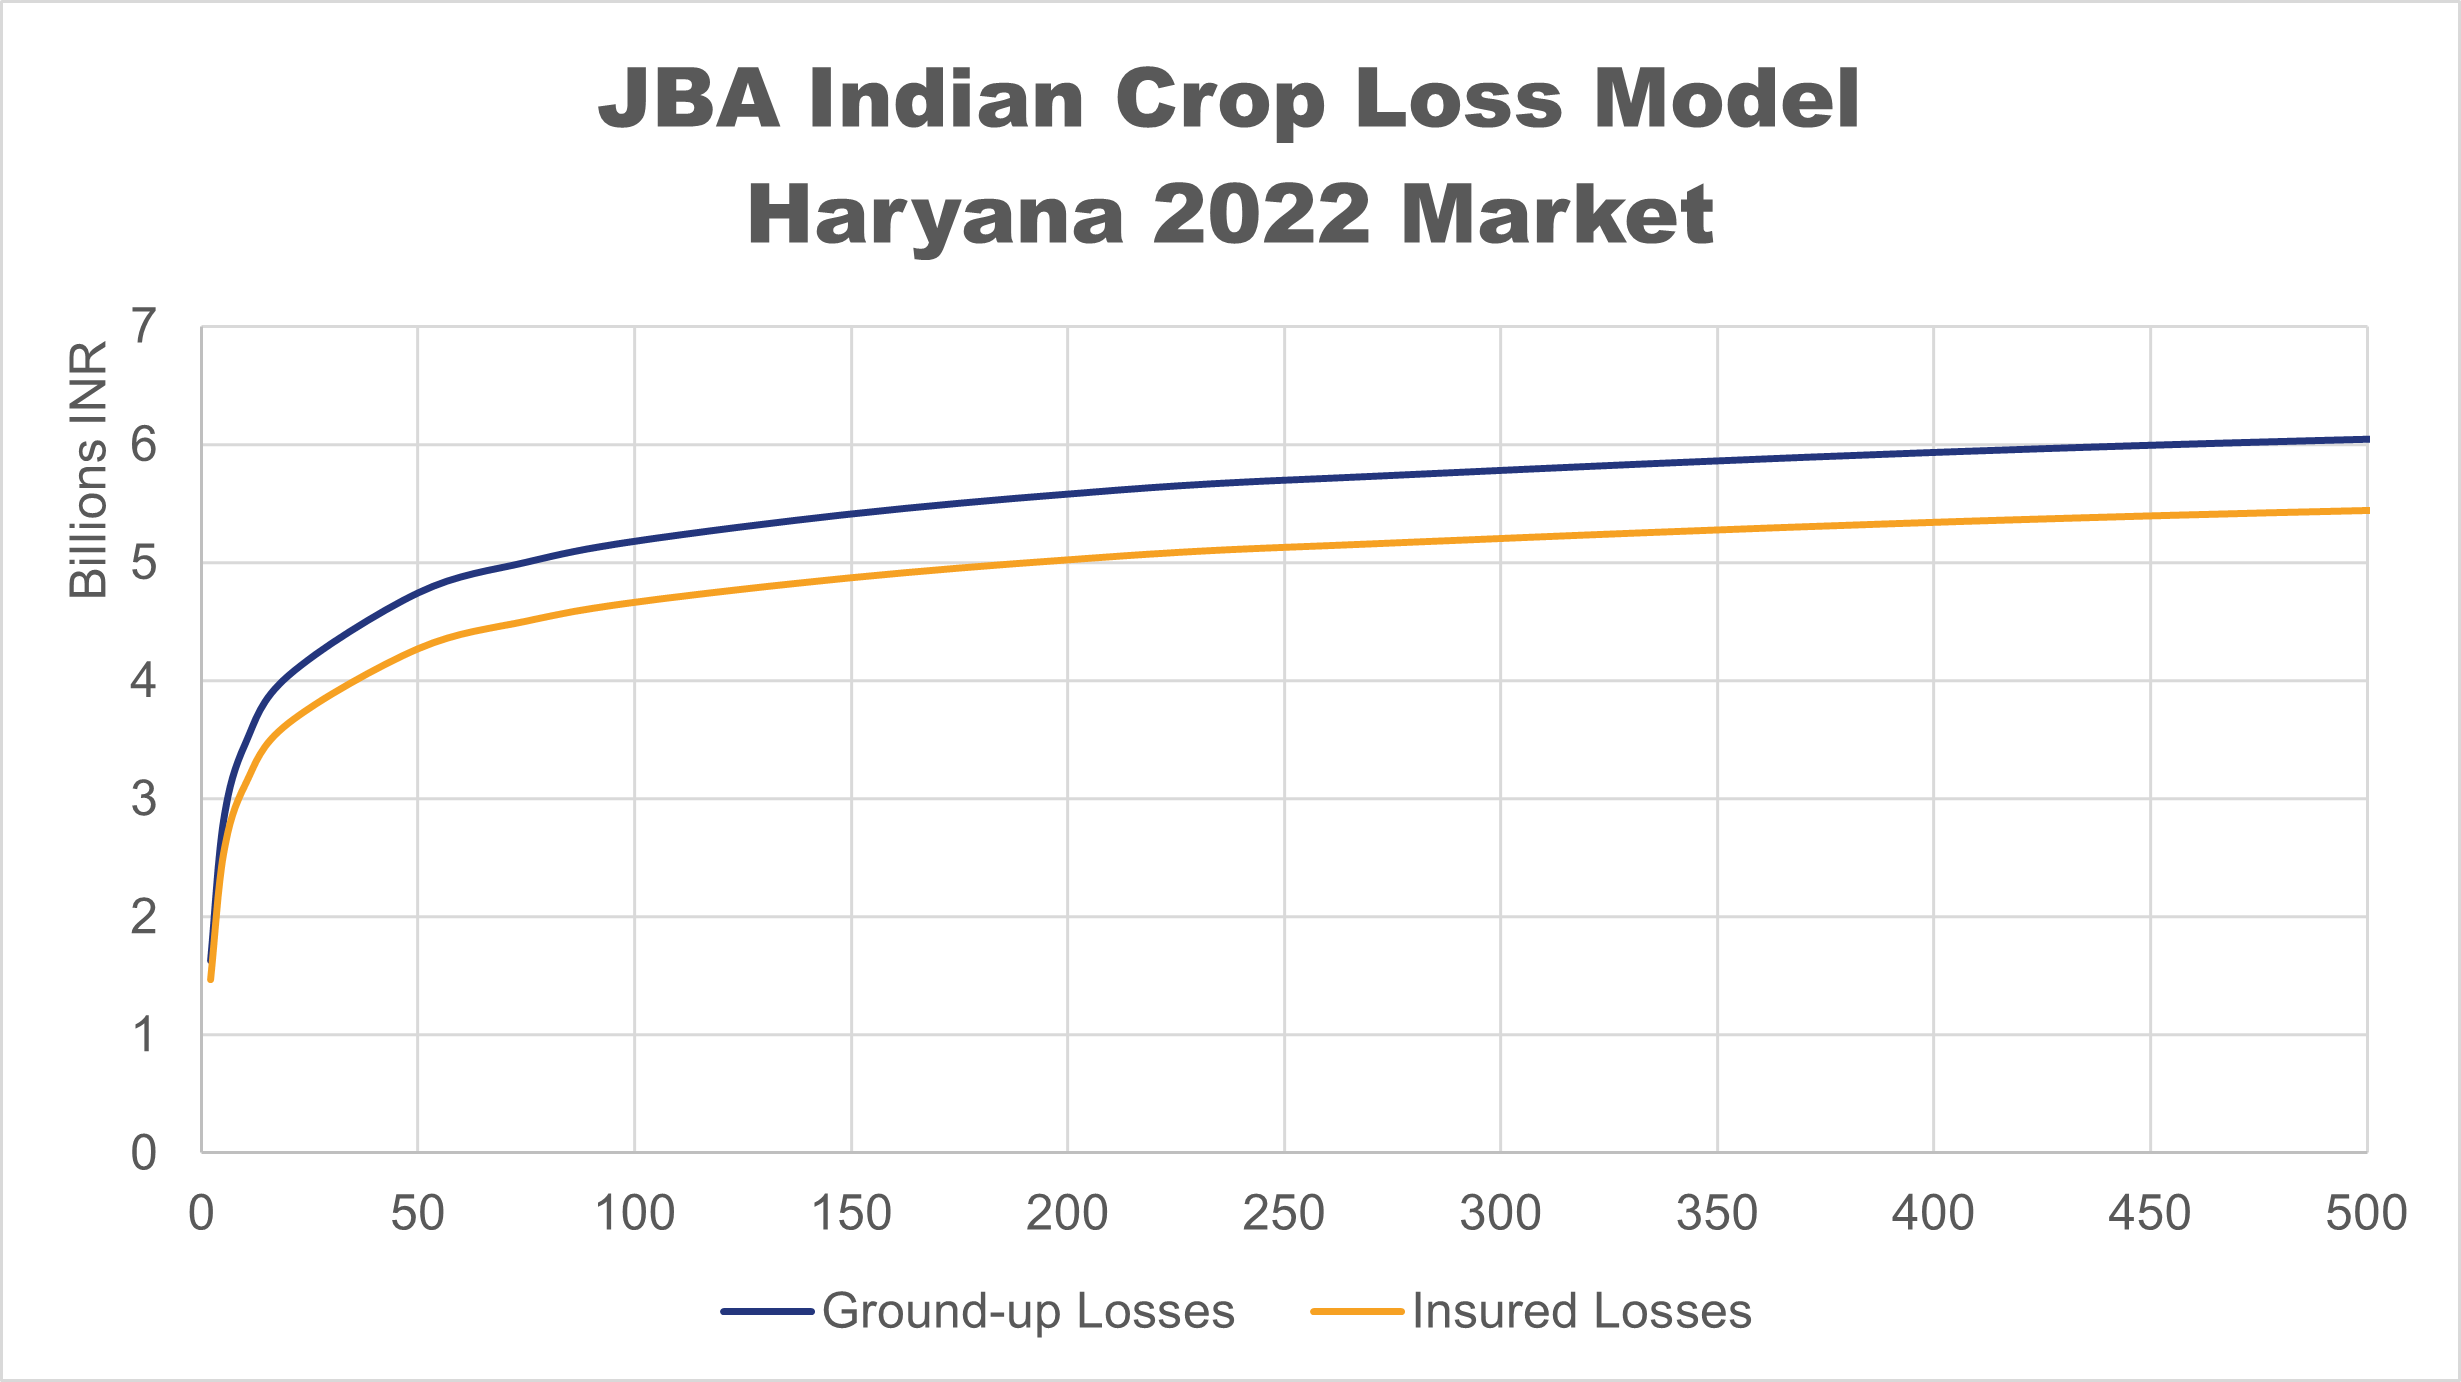 Loss model graph of 2022 Haryana market